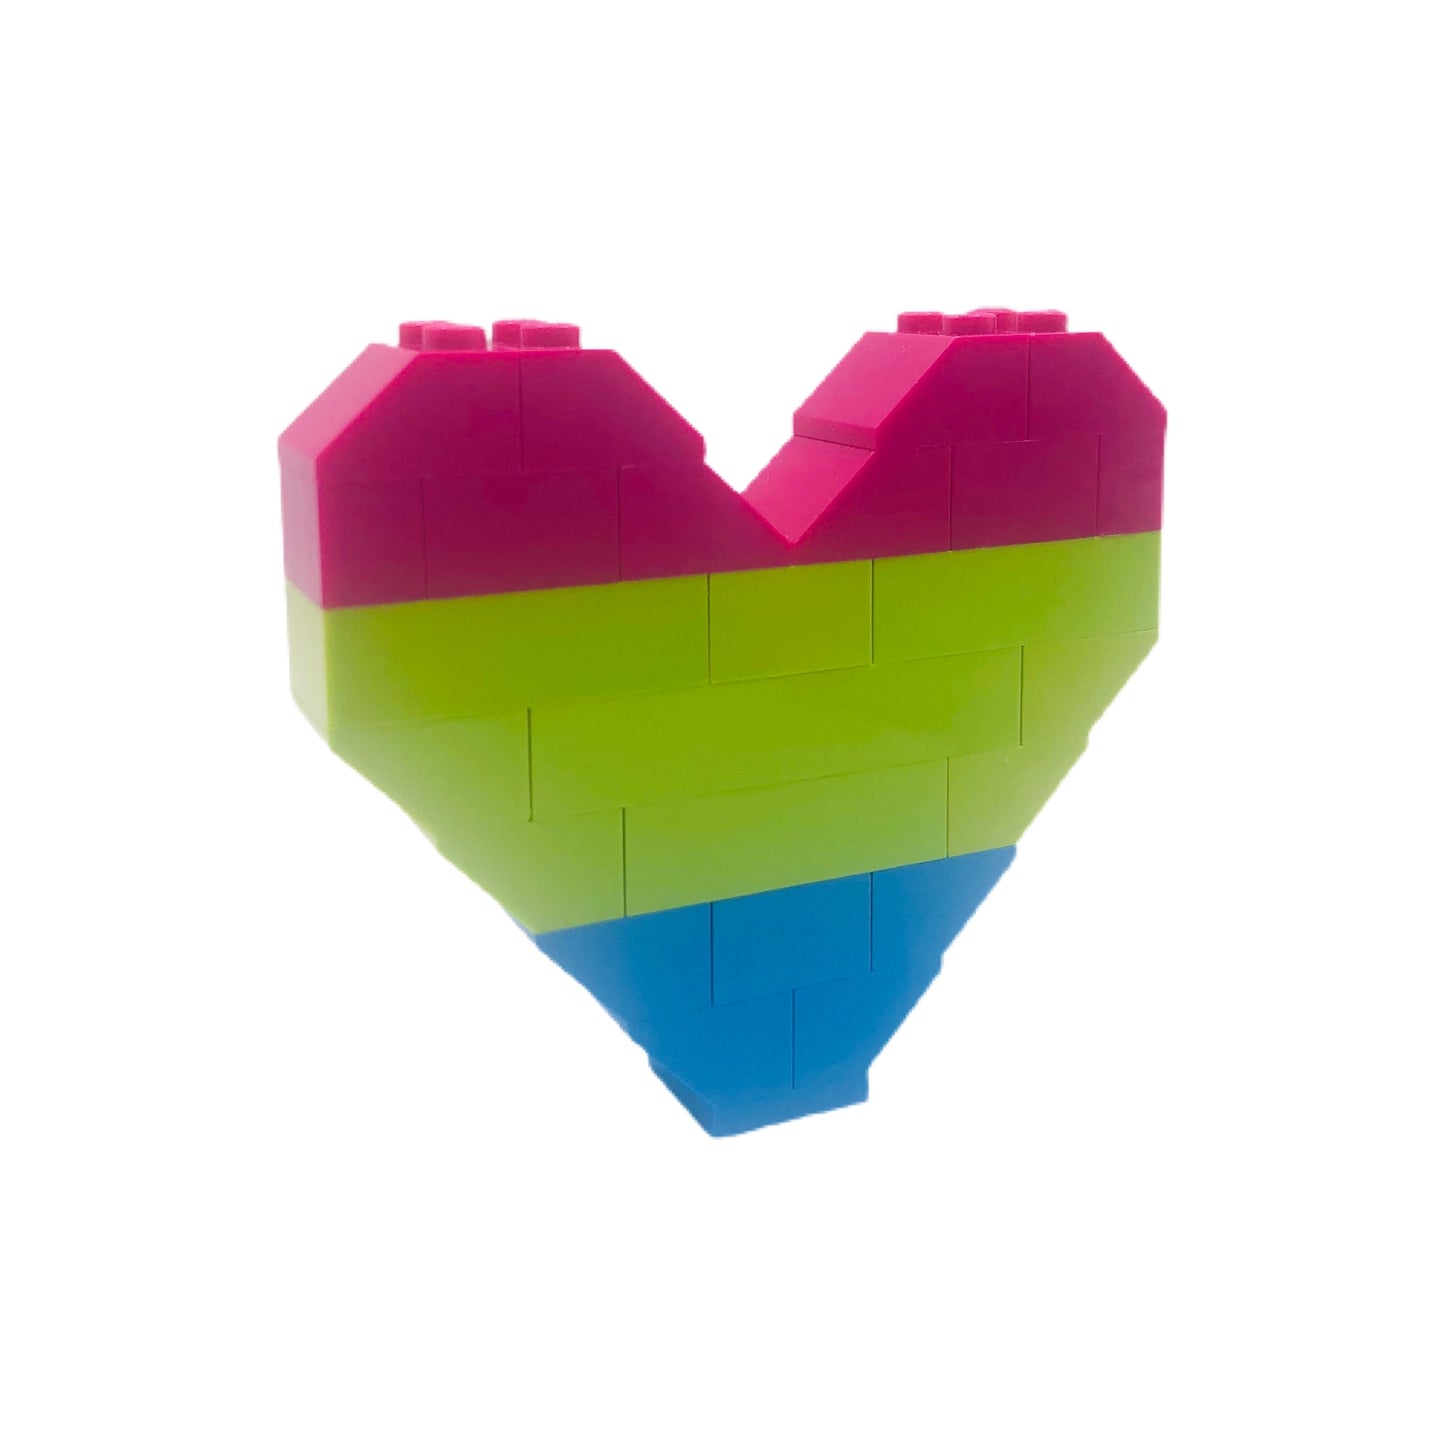 BrickNetty Pride Heart - Polysexual Pride Flag